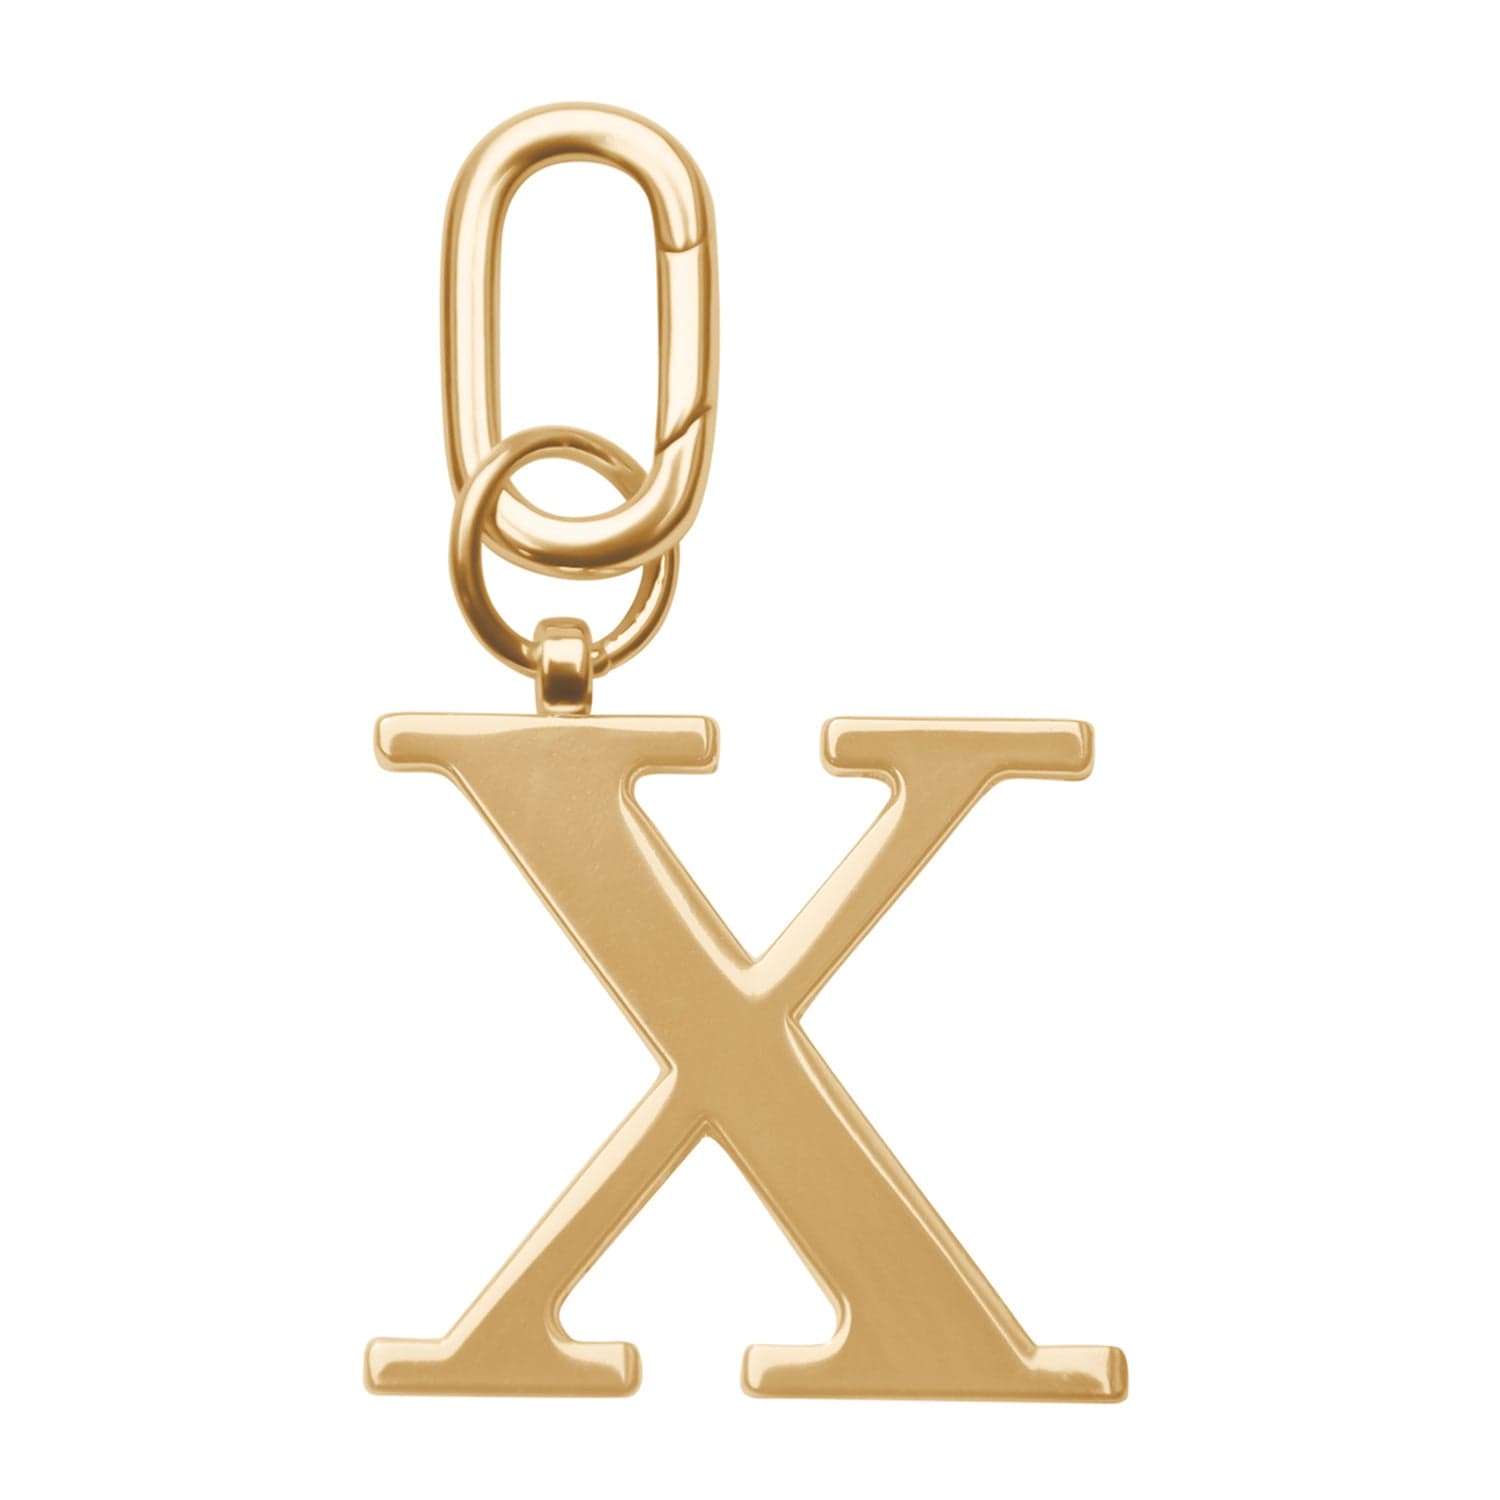 Gold Metal Letter Keyring - X One Size Jlr London